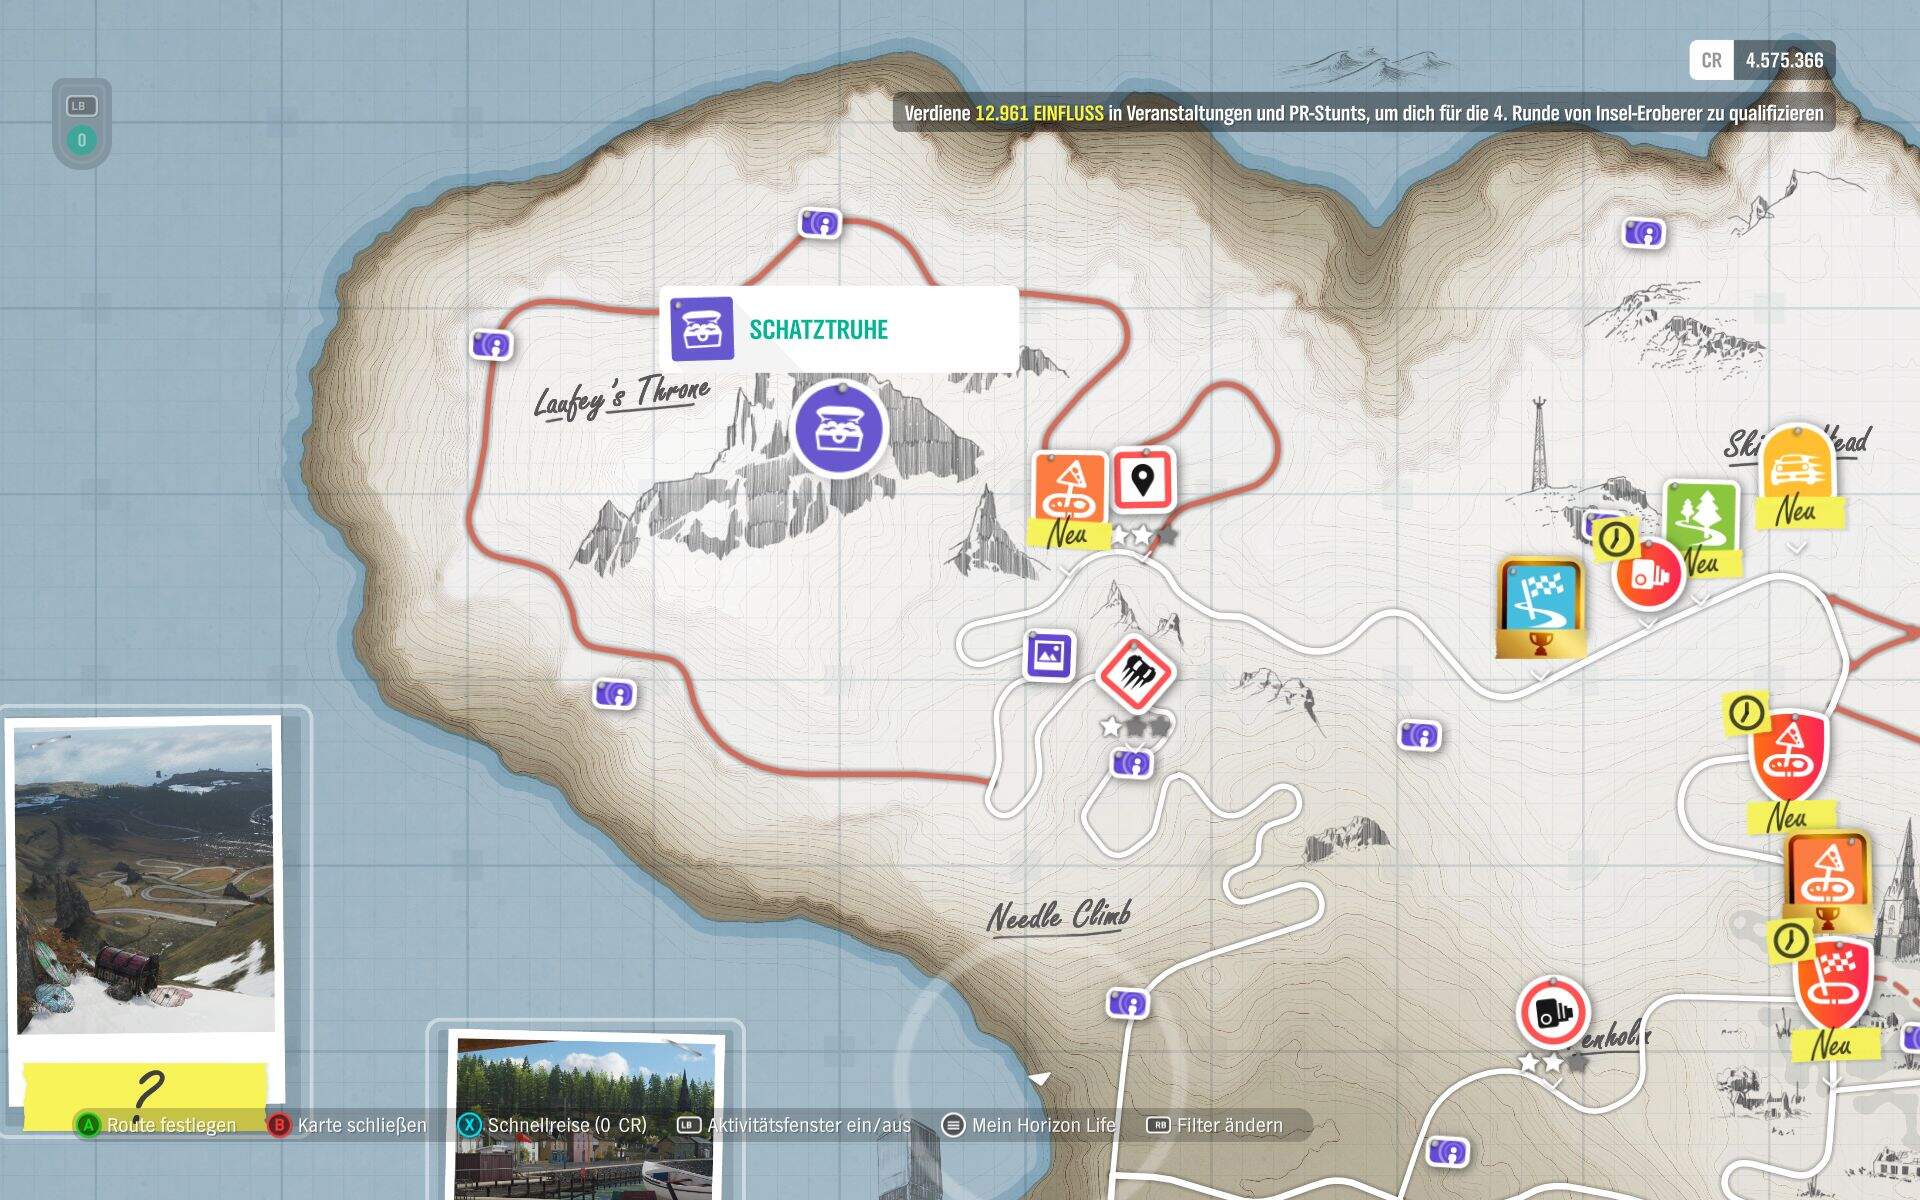 Forza horizon 4 island. Forza Horizon 4 остров сокровищ карта. Forza Horizon 4 Fortune Island карта. Forza Horizon 4 карта. Сокровища Форчун Айленд Forza Horizon 4.